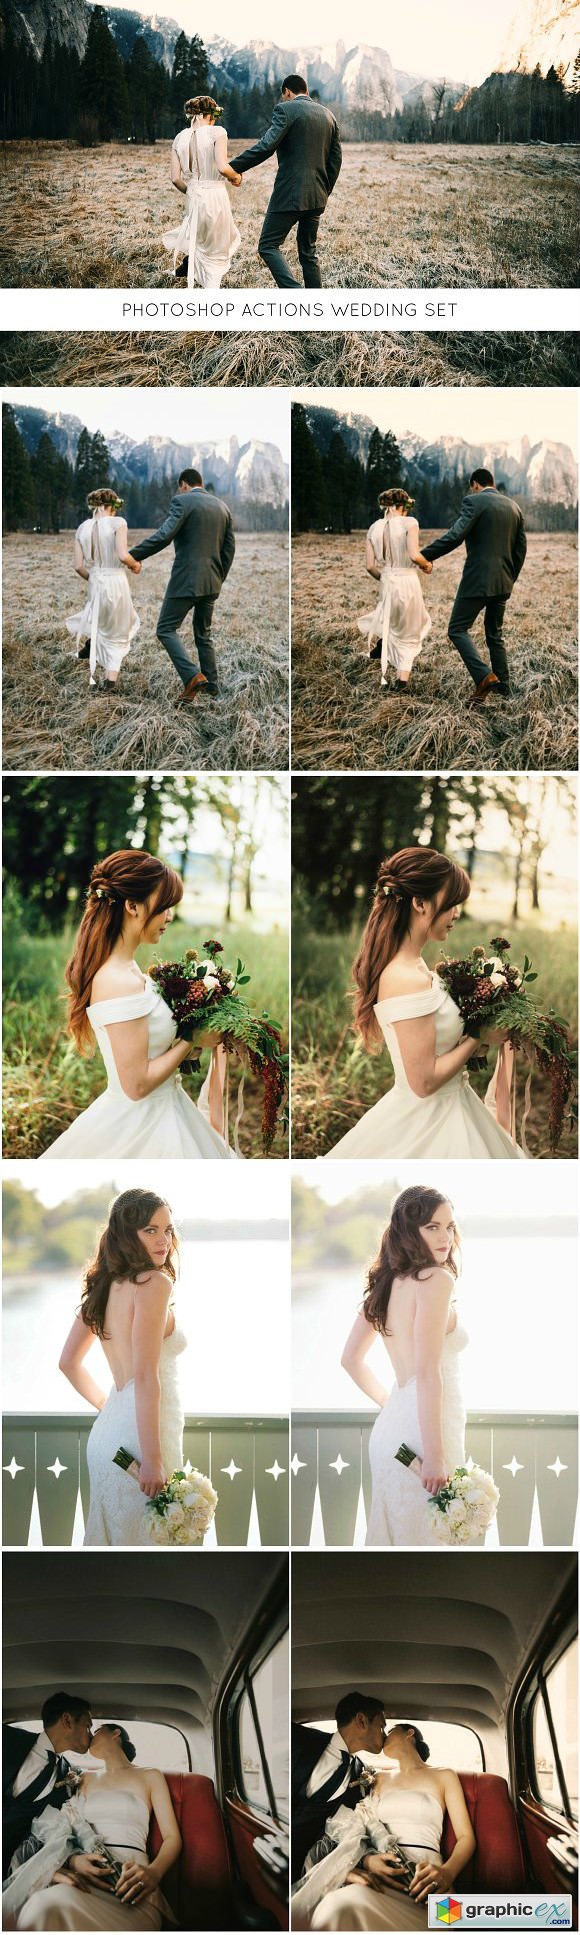 Photoshop actions wedding set